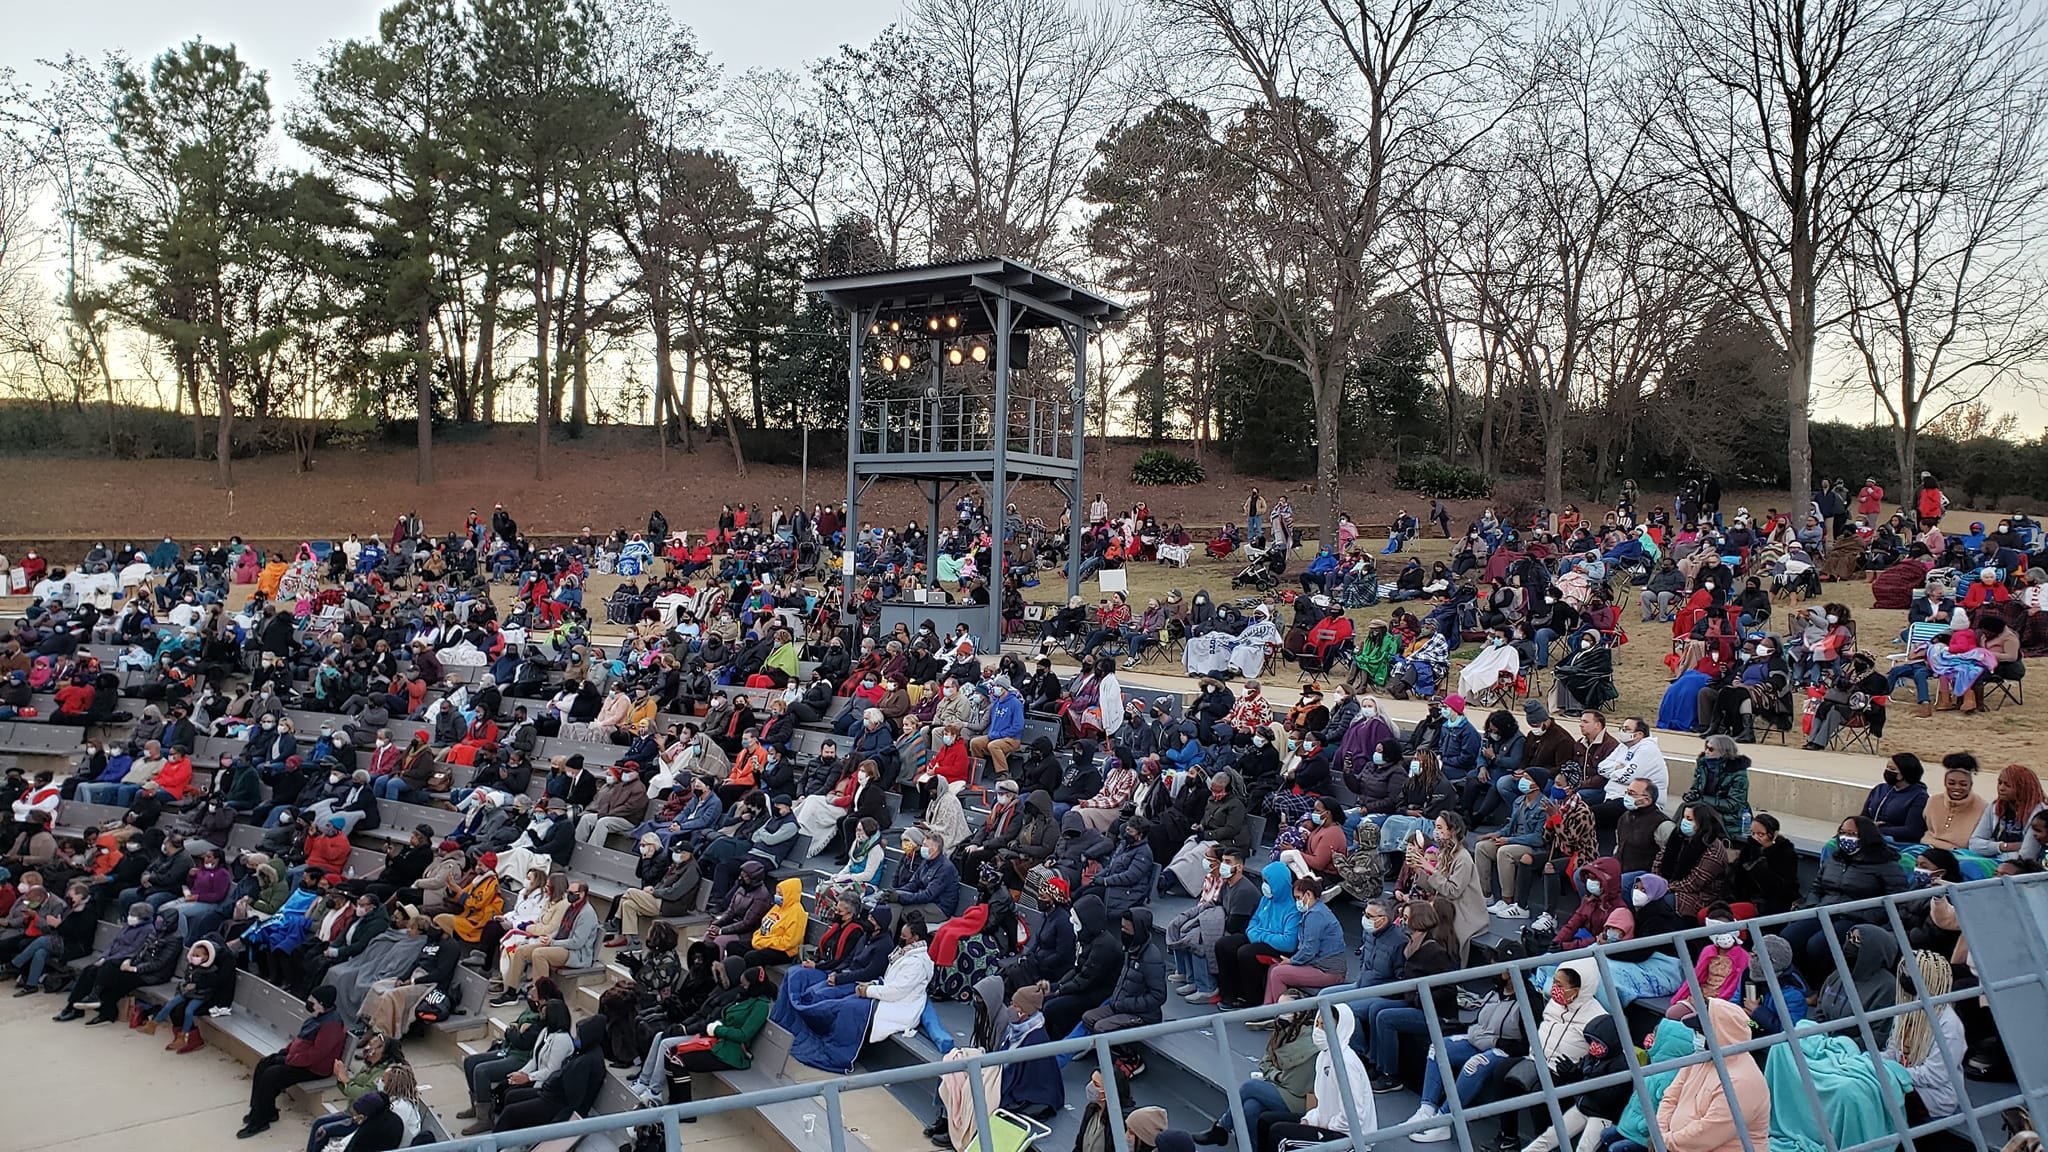 bn 2021 crowd at amphitheater.jpg